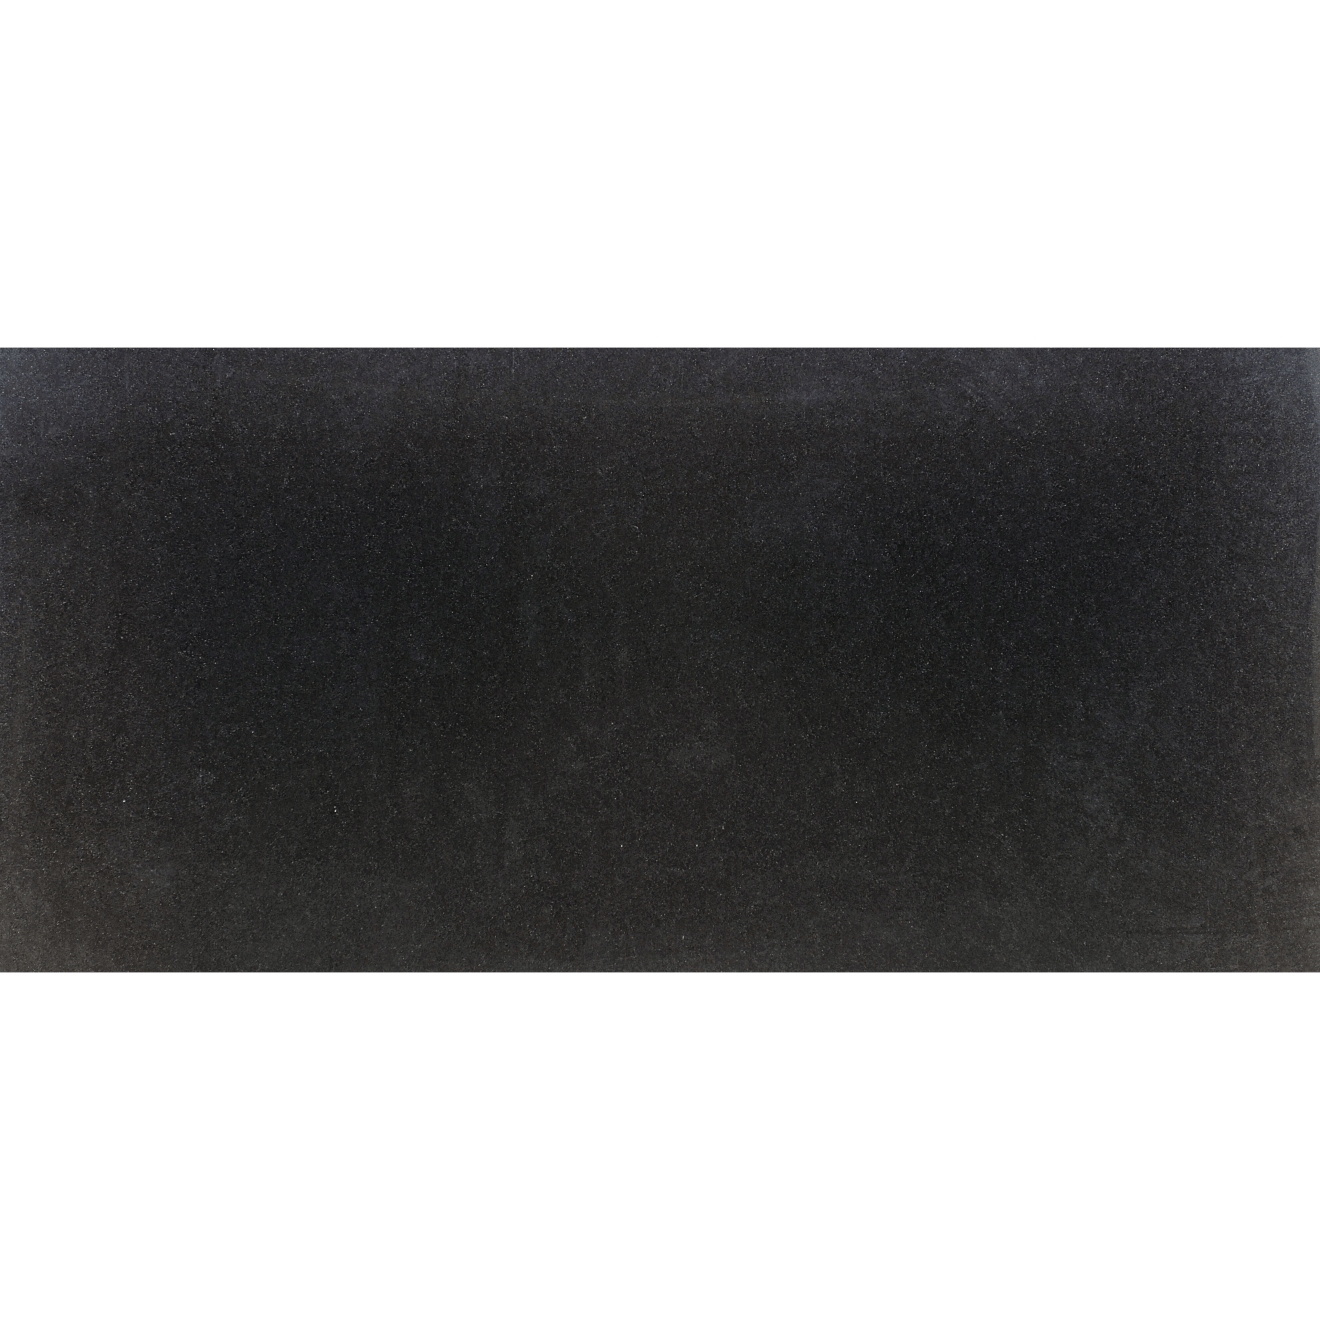 Absolute Black Honed Granite Slab - 2cm